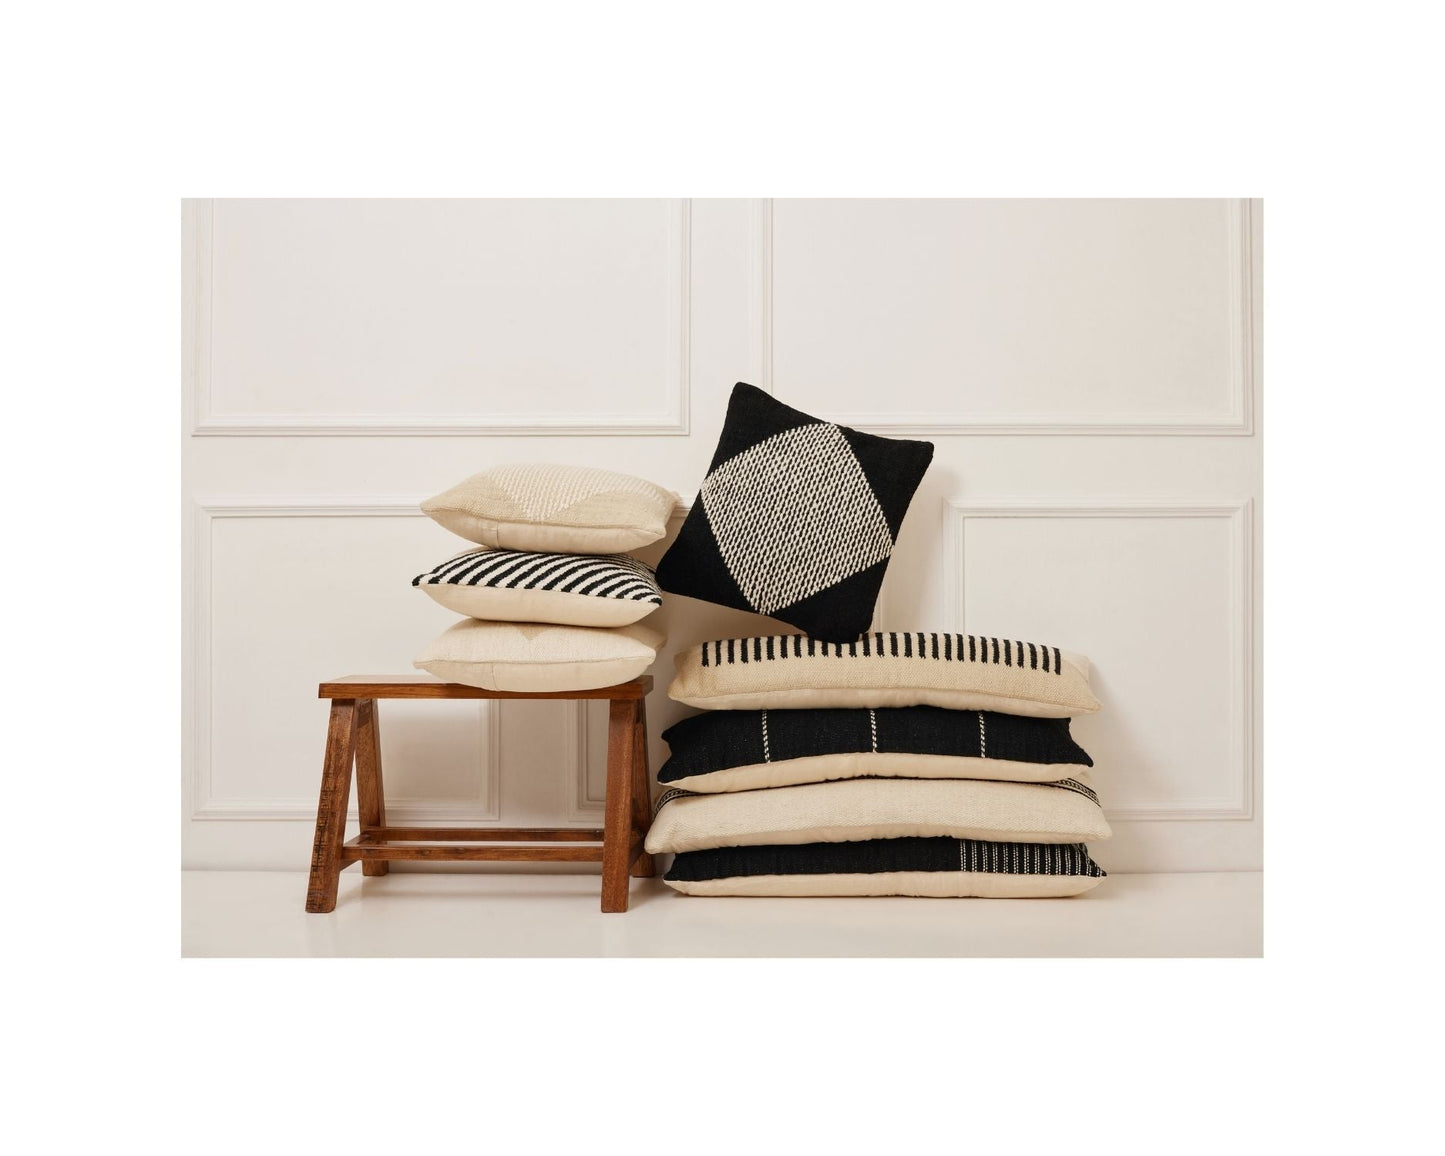 GoodWeave Certified Stripe Lumbar Wool Pillow - Black, 12x34 Inch by The Artisen